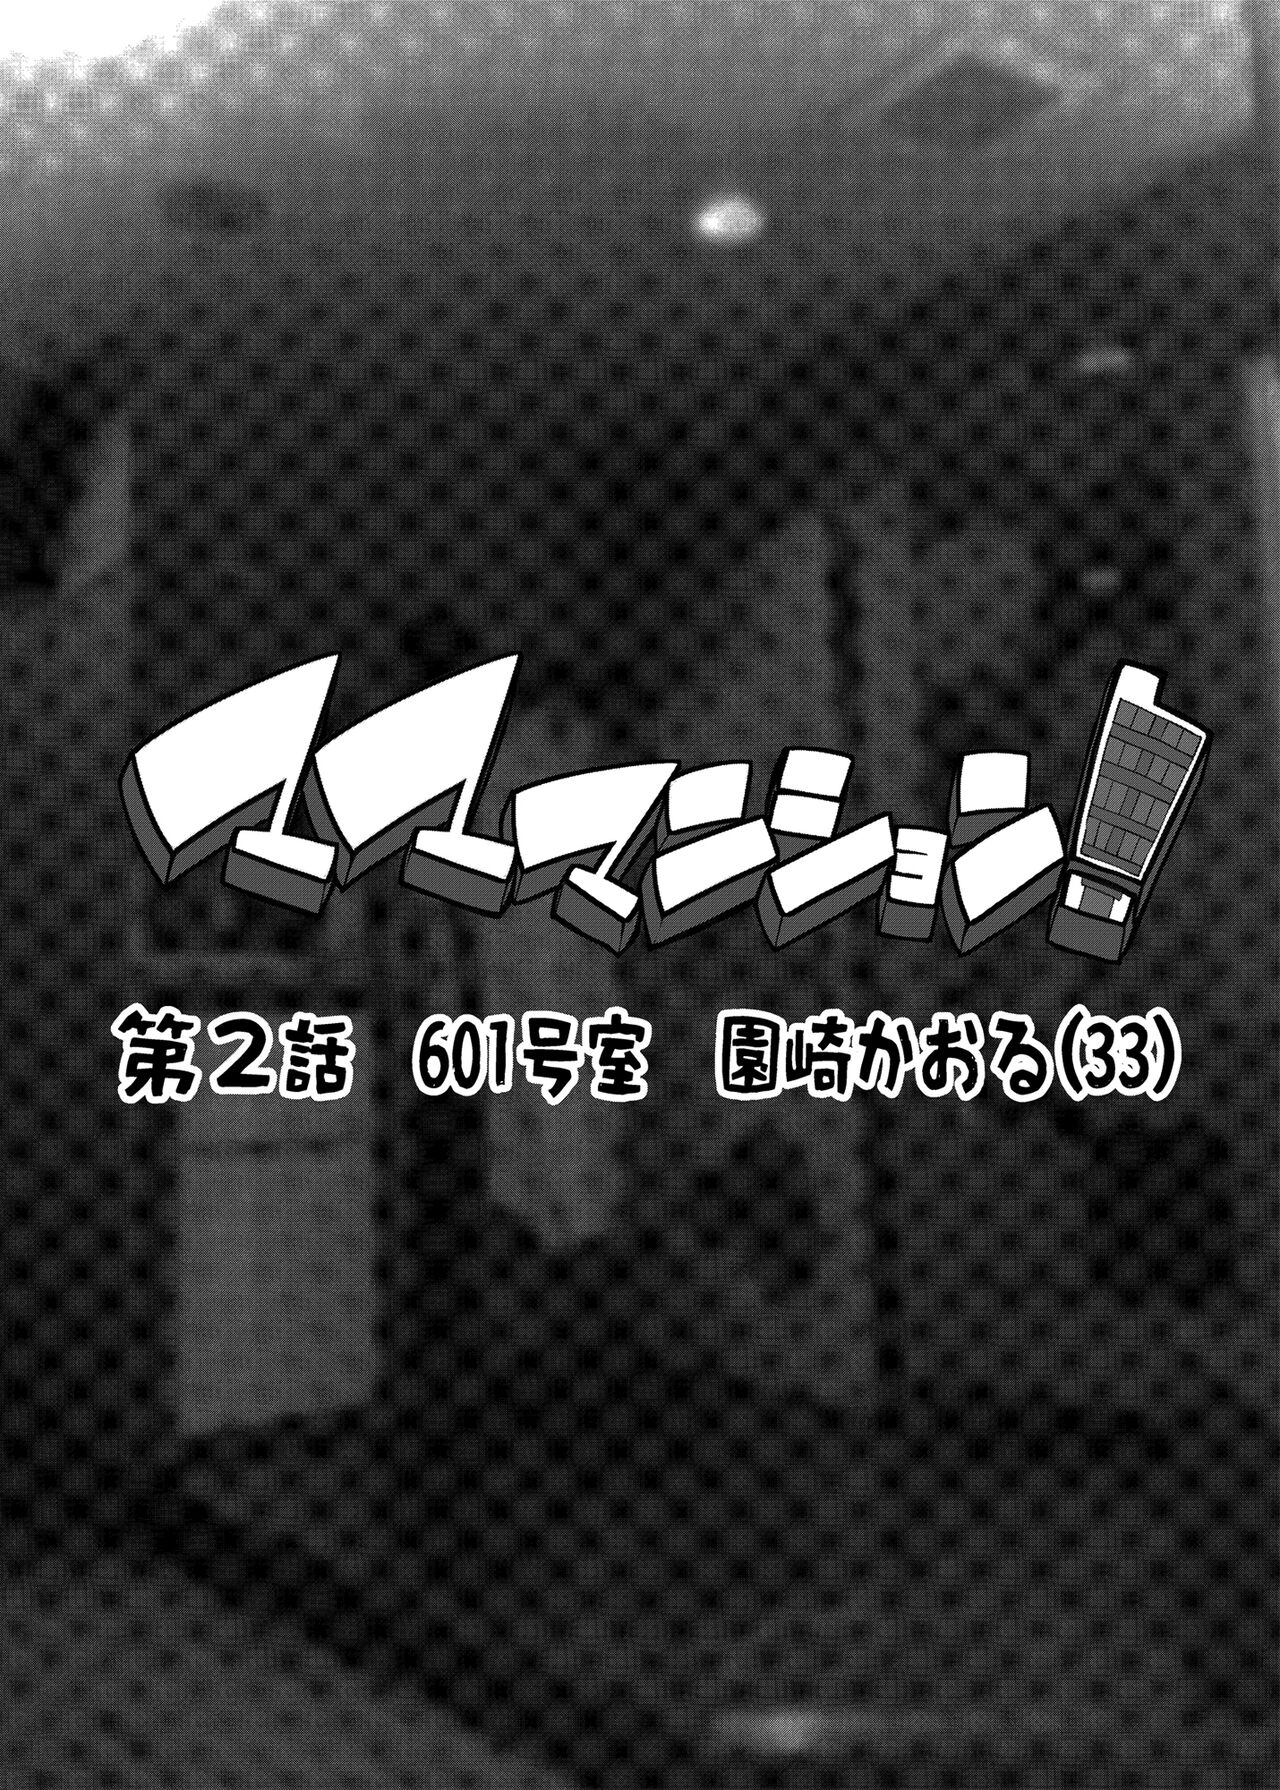 Mama Mansion! Dainiwa 601 Goushitsu Sonosaki Kaoru (33) | Особняк мамочки ~Глава вторая: Квартира 601, Сонозаки Каору, 33 года~ - Foto 2